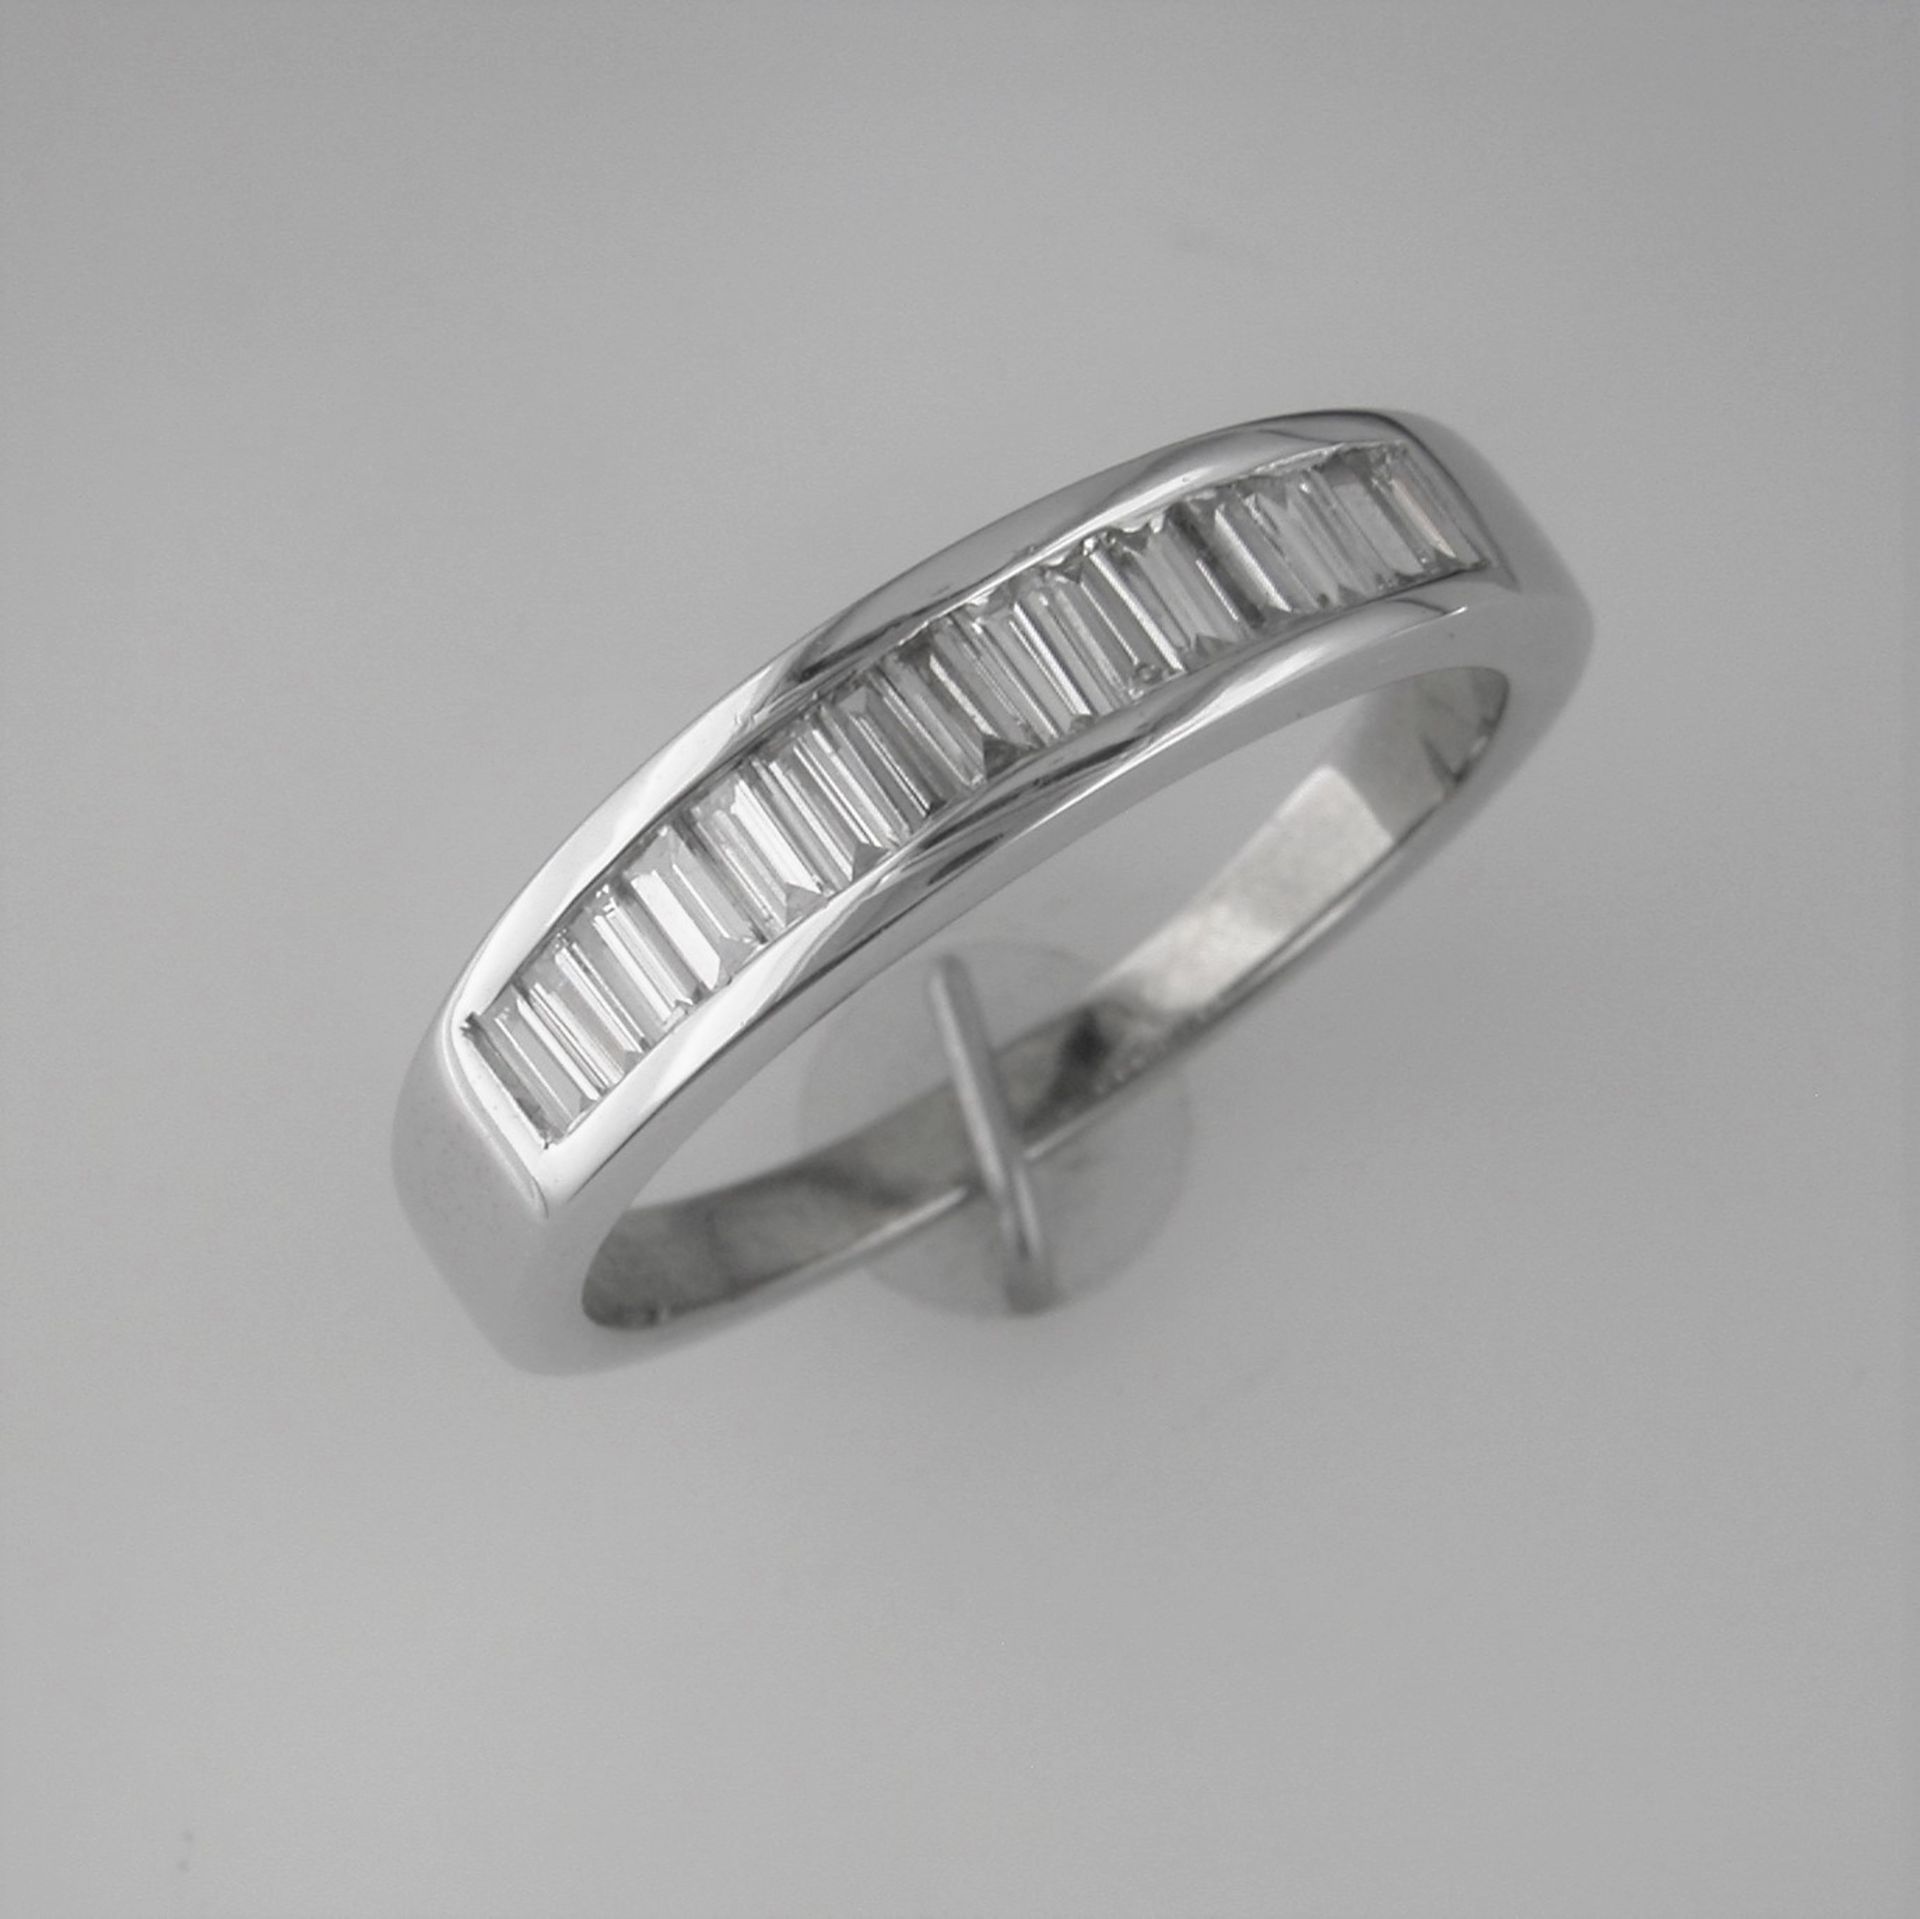 A " Fully Restored" Half Eternity Ring